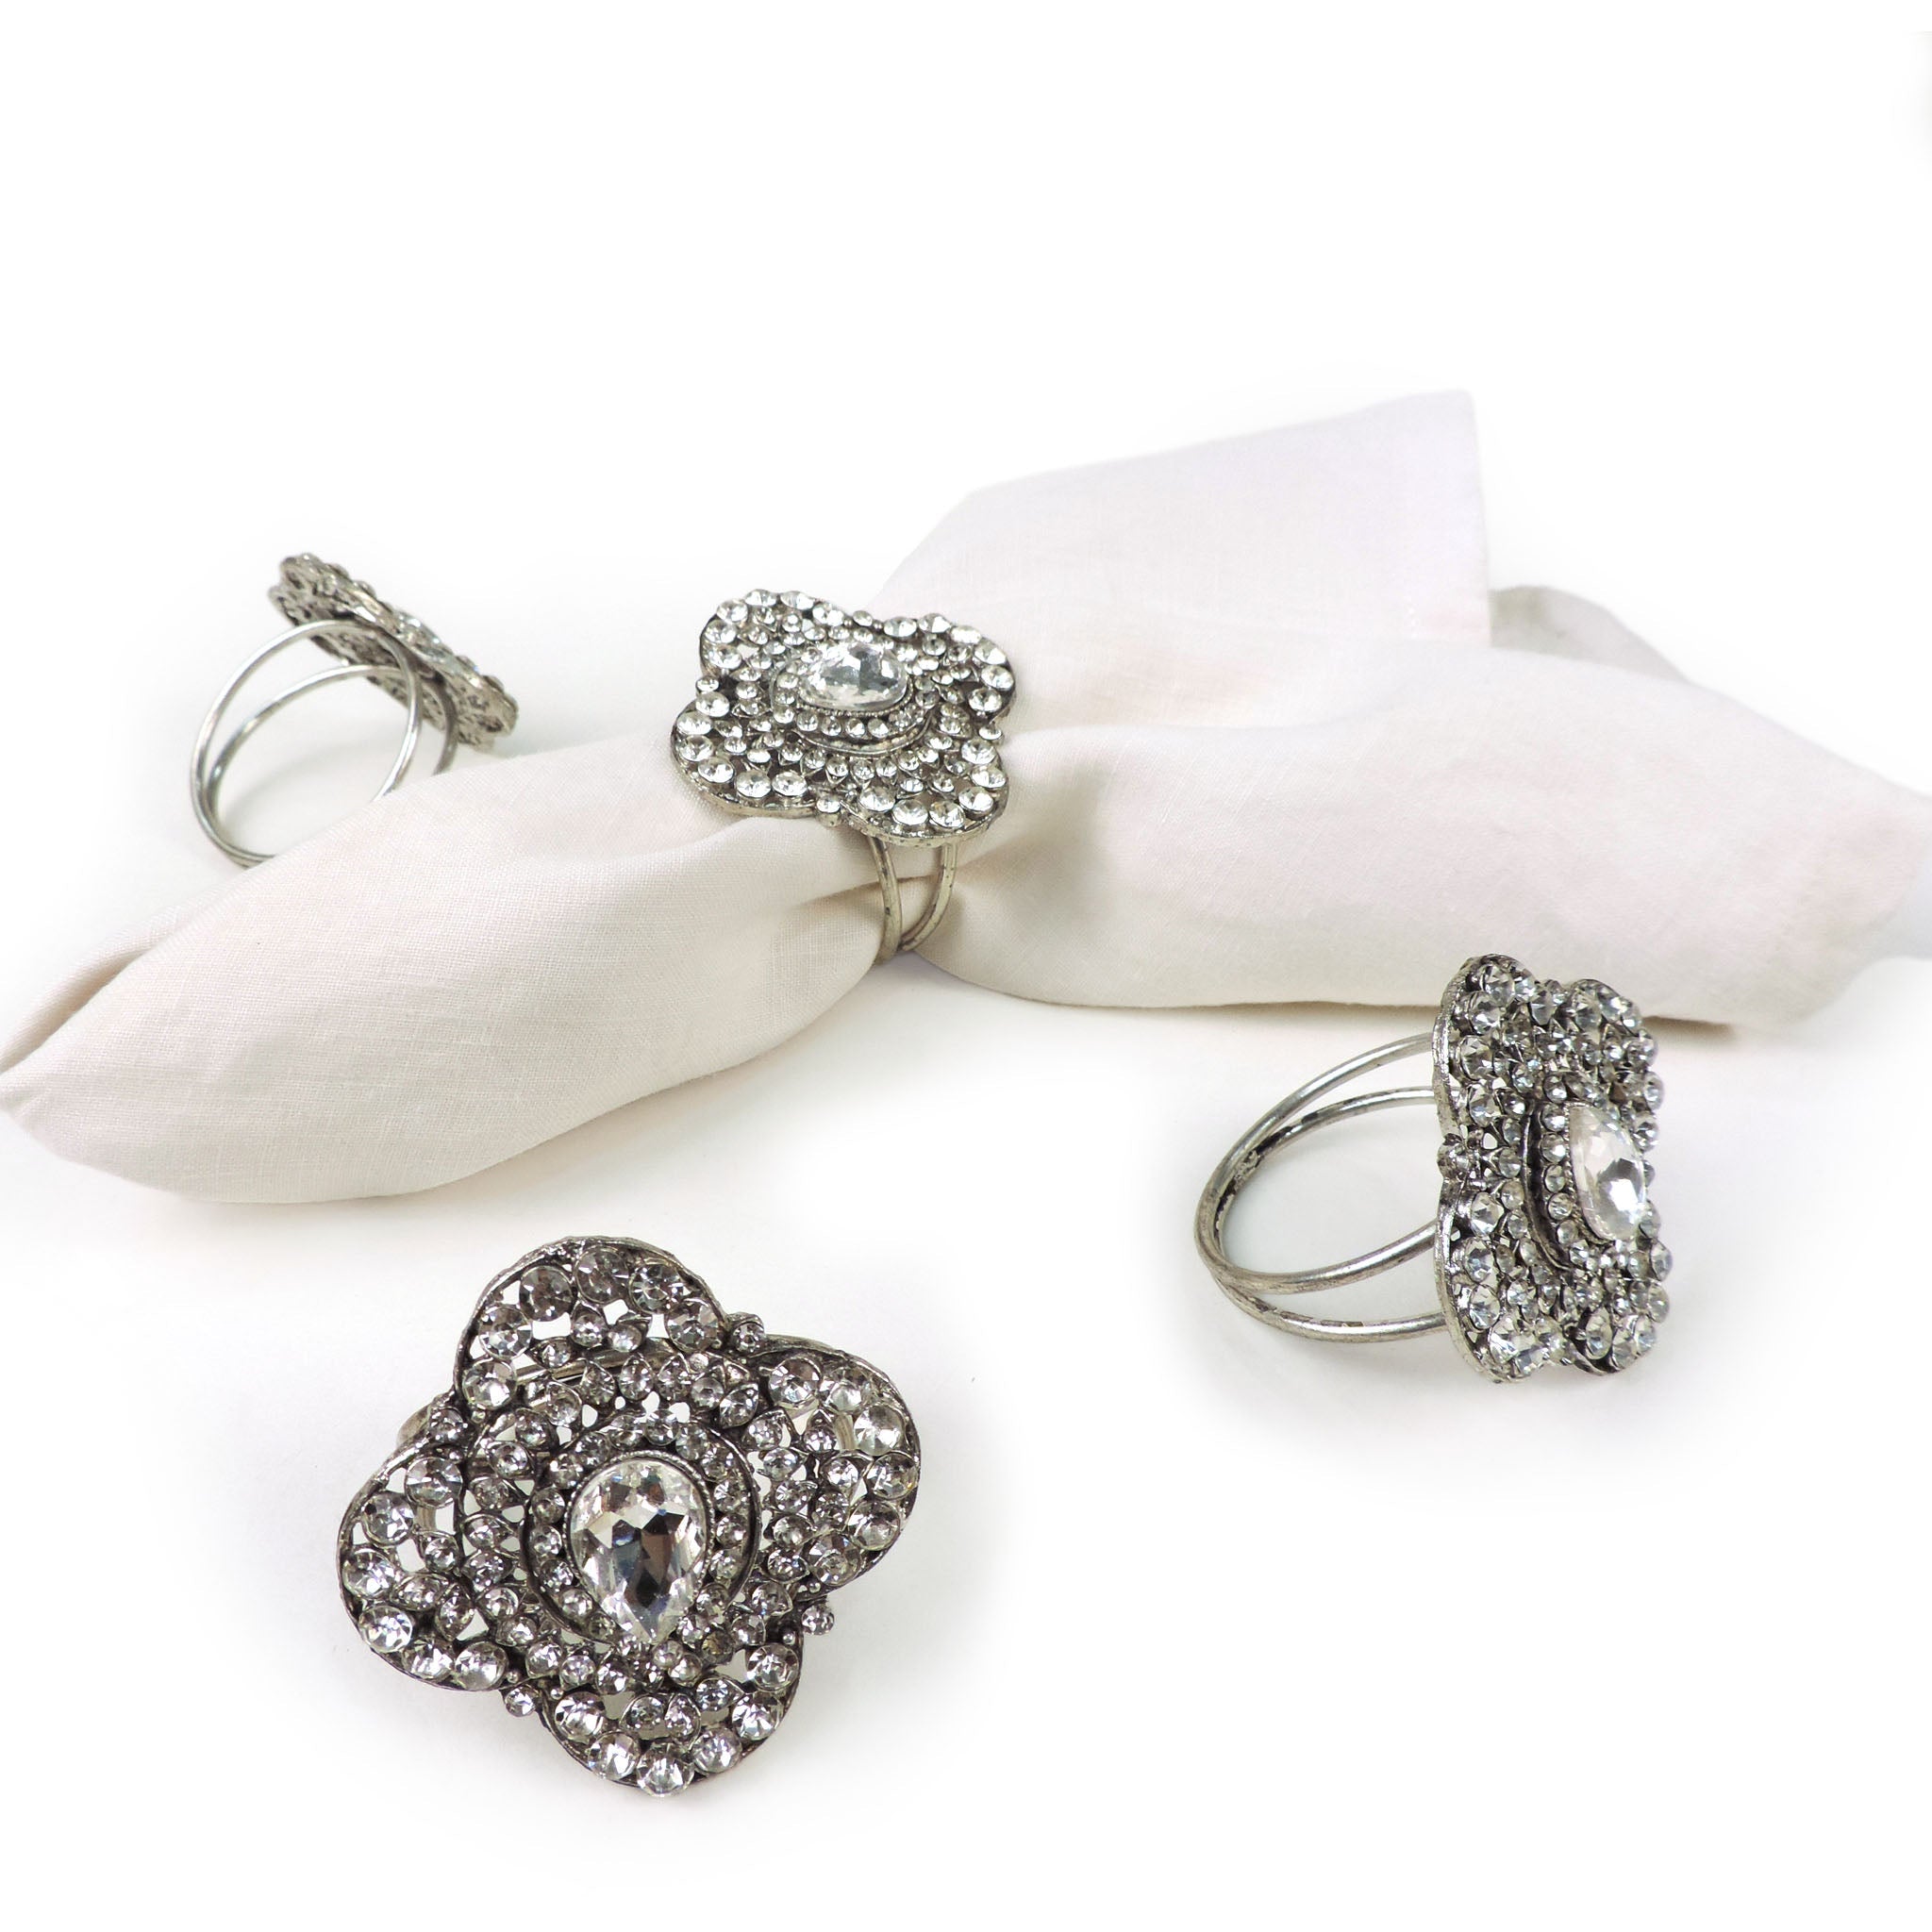 Gorgeous Gemstone-embellished Napkin Ring in Silver, Set of 4